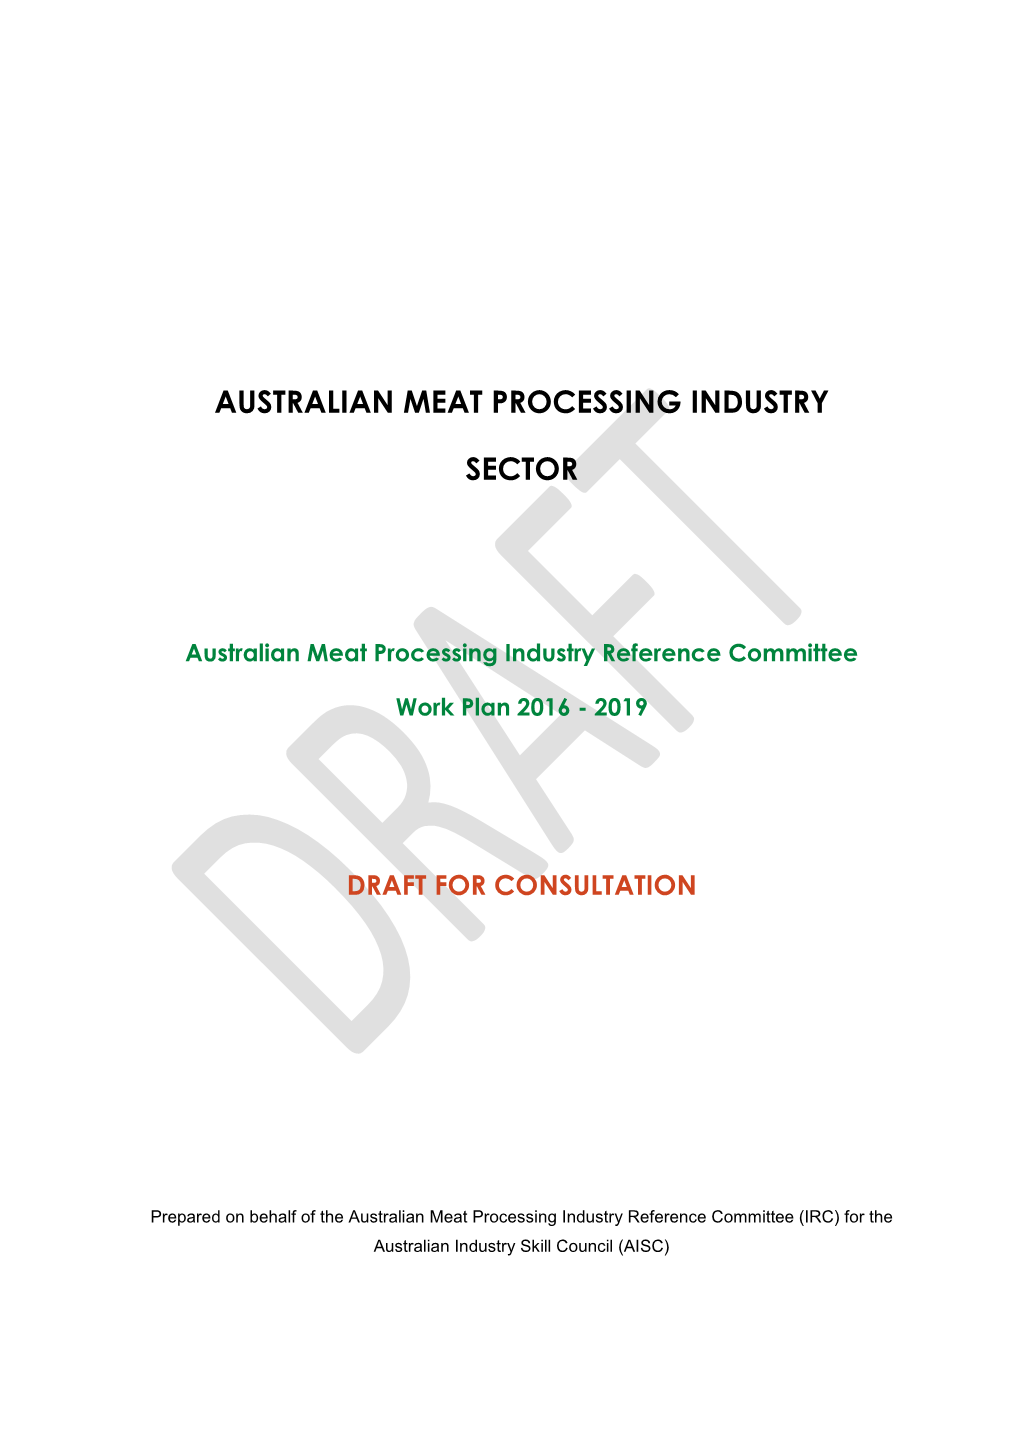 Australian Meat Processing Industry Sector